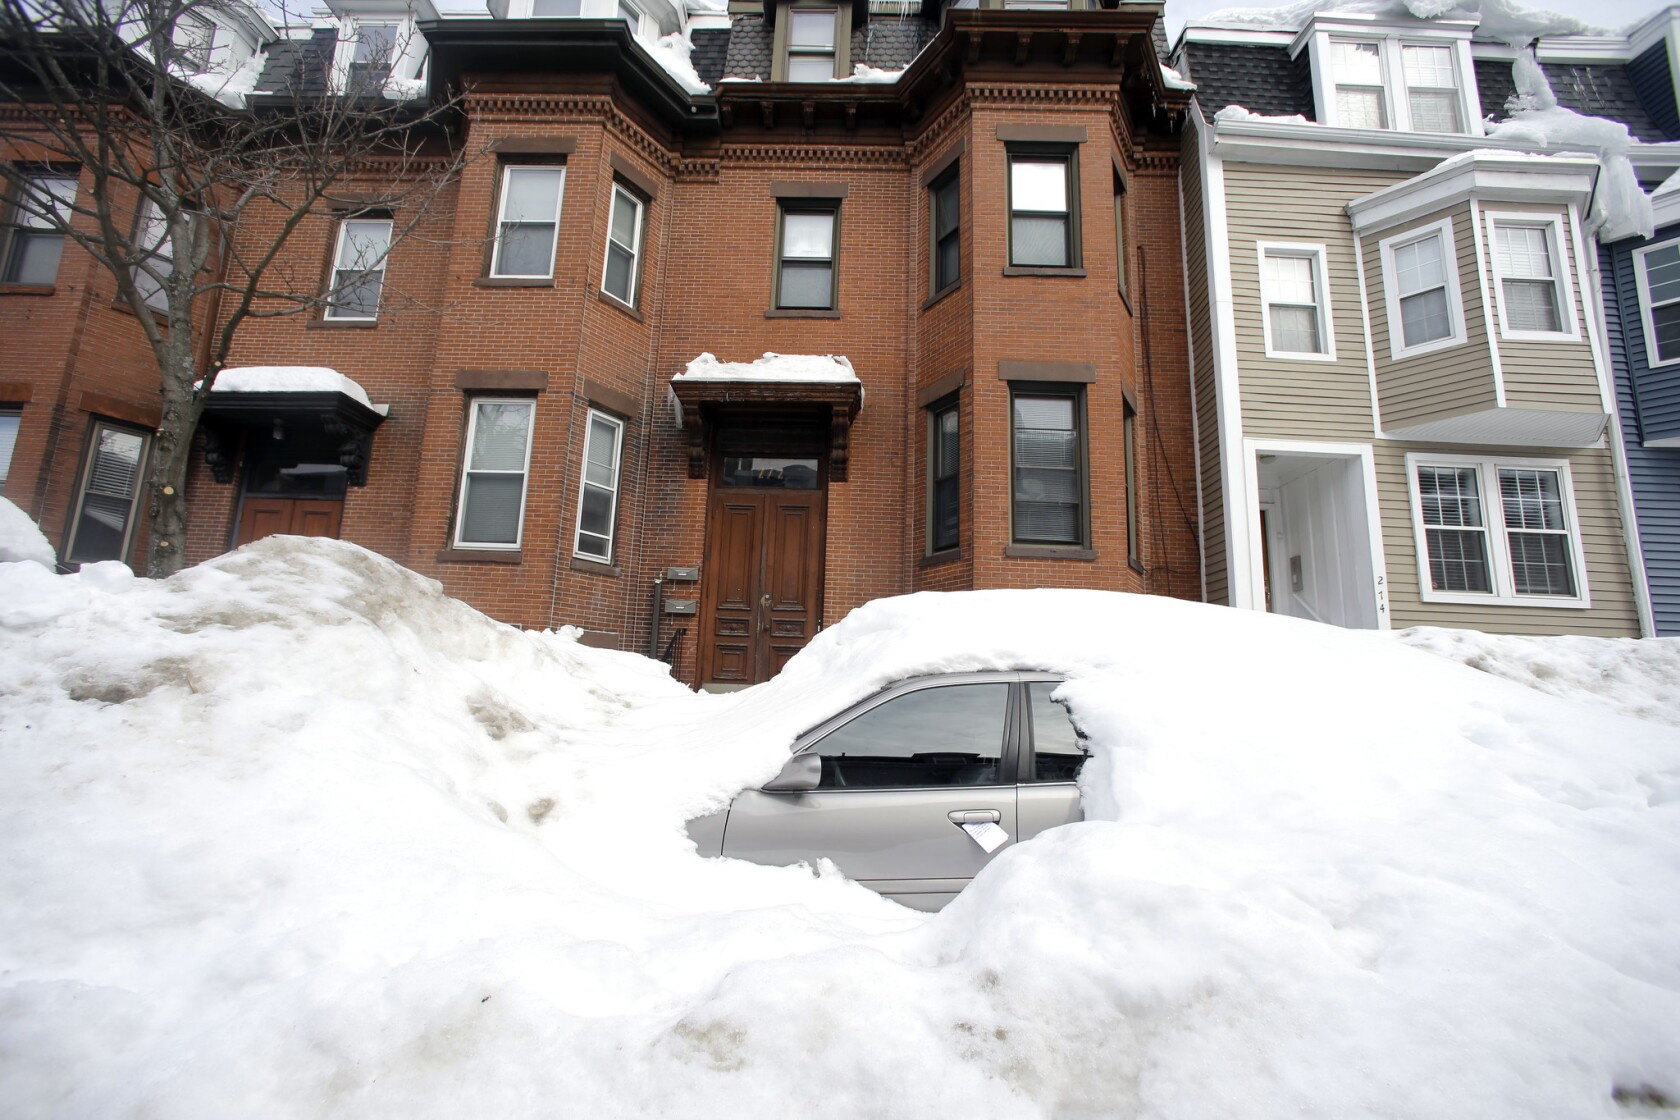 Boston Snowfall Tops 9 Feet Breaking Citys All Time Record Los